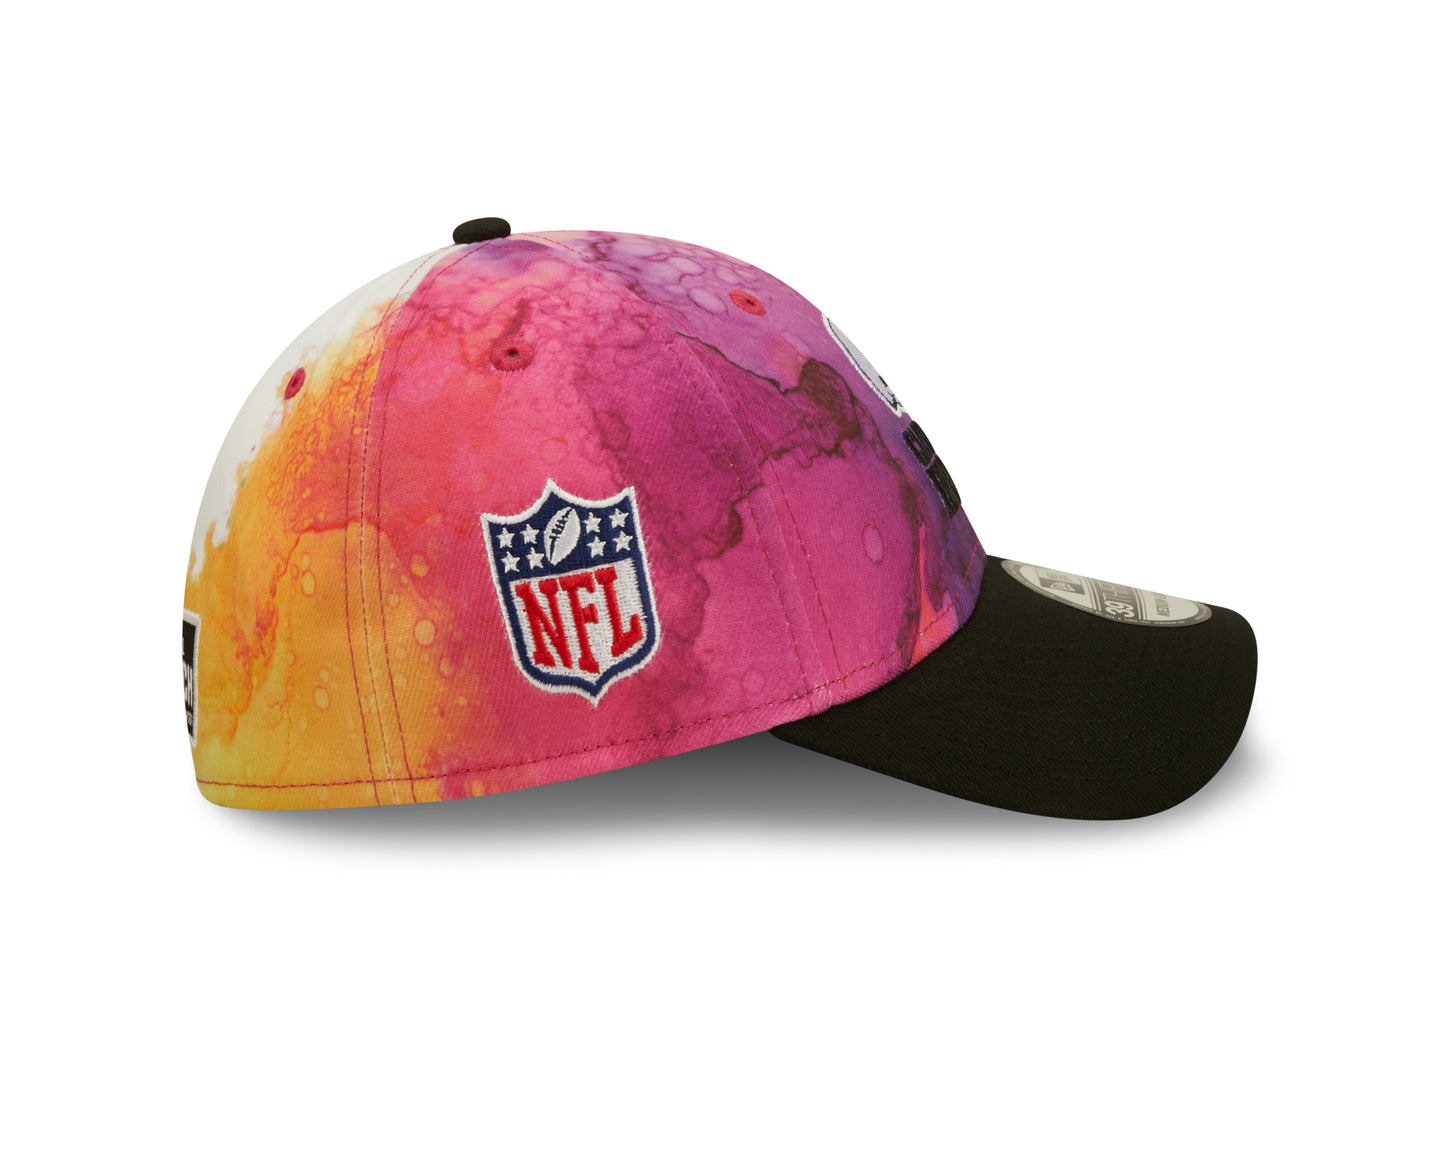 Cleveland Browns Era New Era Sideline Crucial Catch 39Thirty Hat-Ink Pink